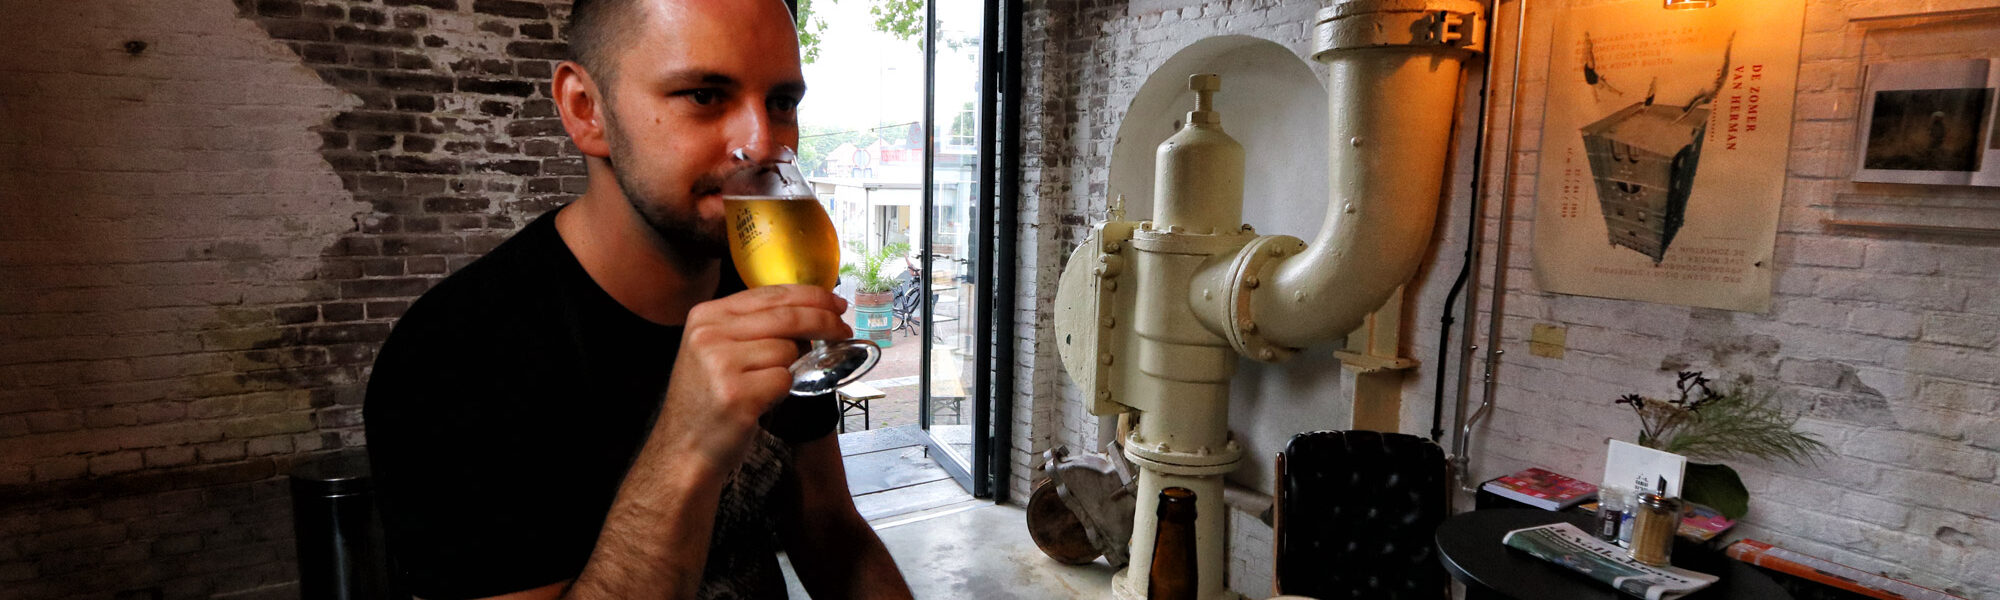 6 leuke biercafés in Den Bosch